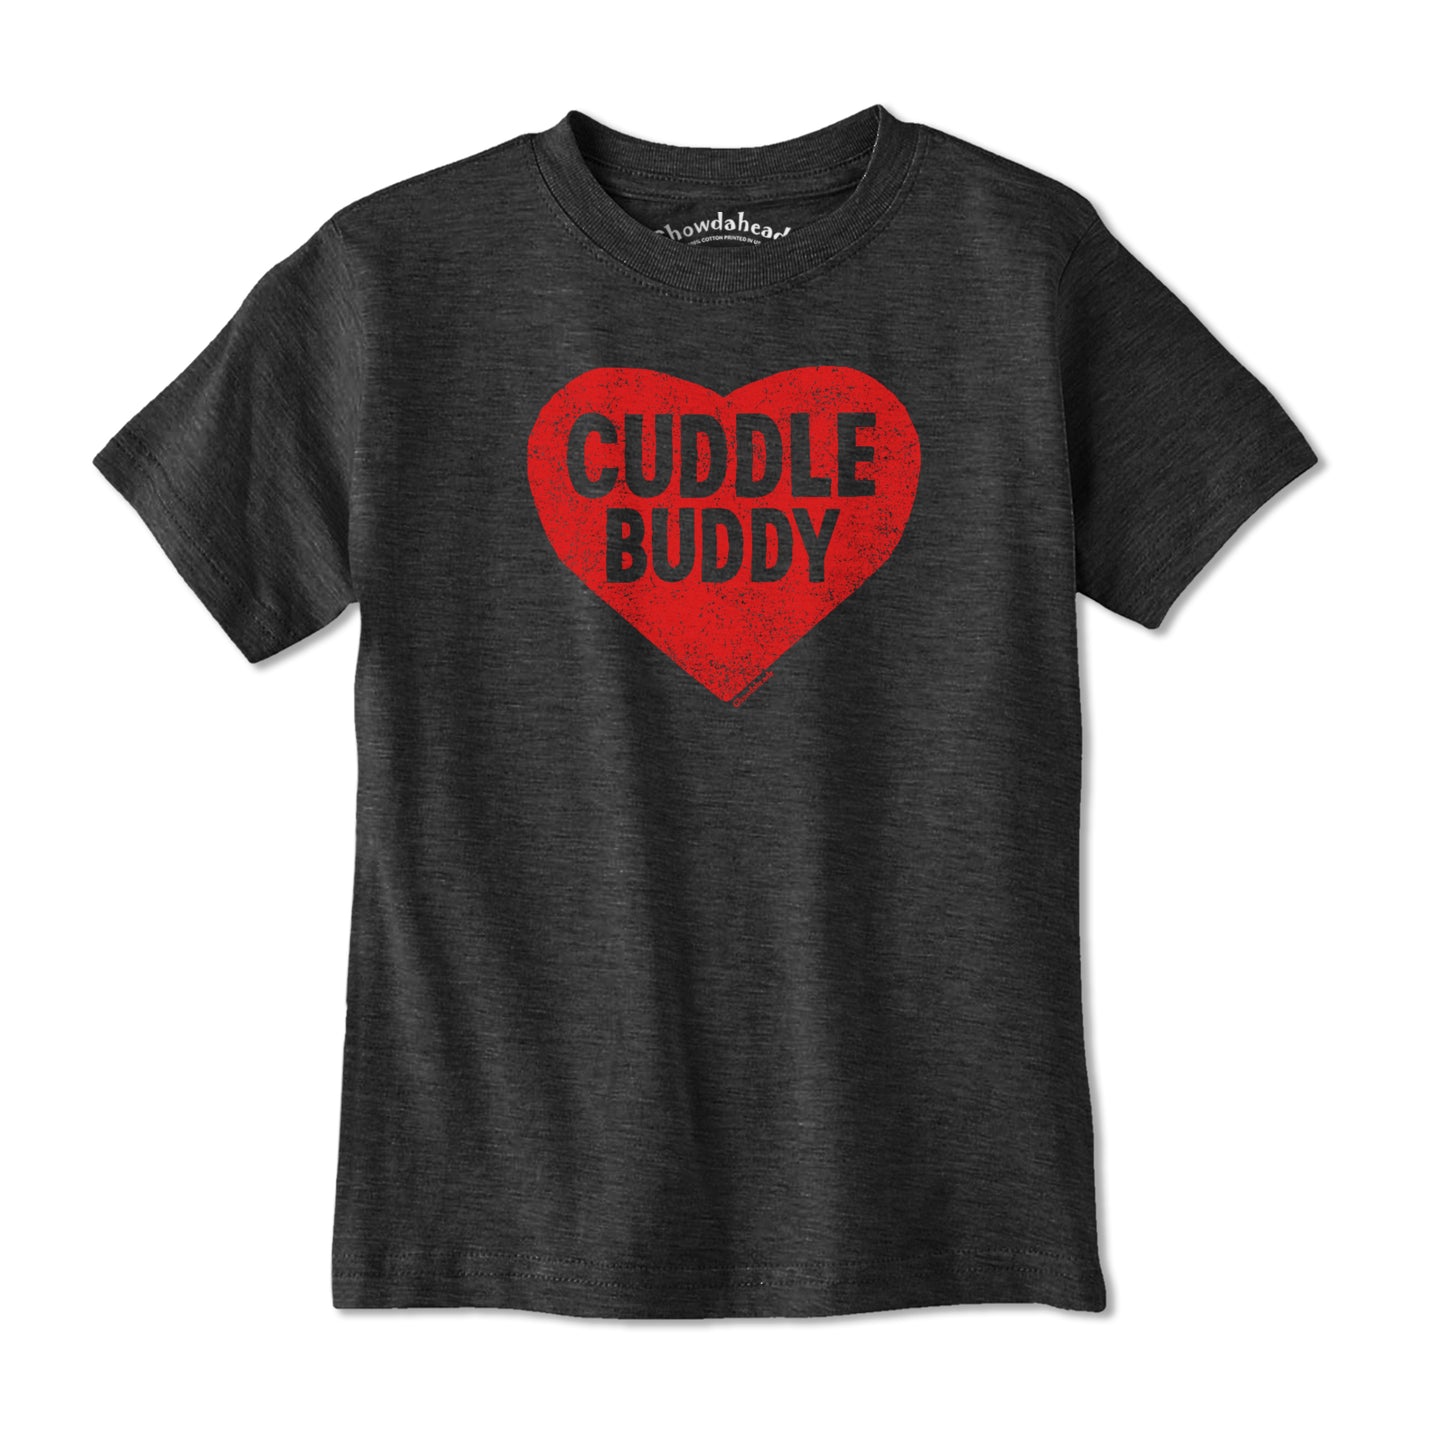 Cuddle Buddy Youth T-Shirt - Chowdaheadz